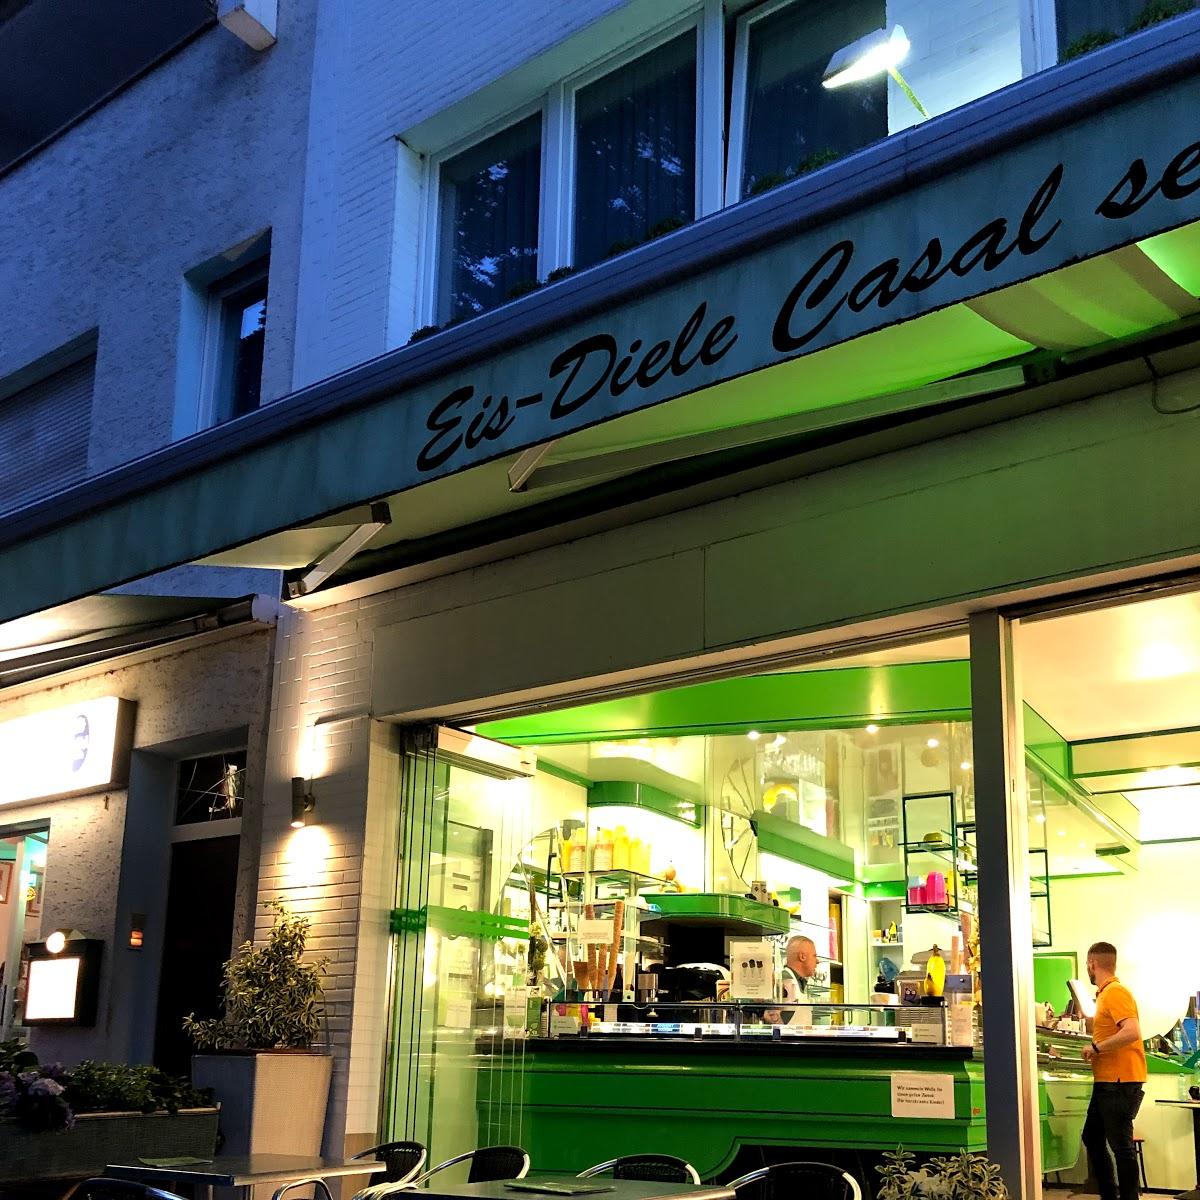 Restaurant "Eis Casal e.K." in Würselen